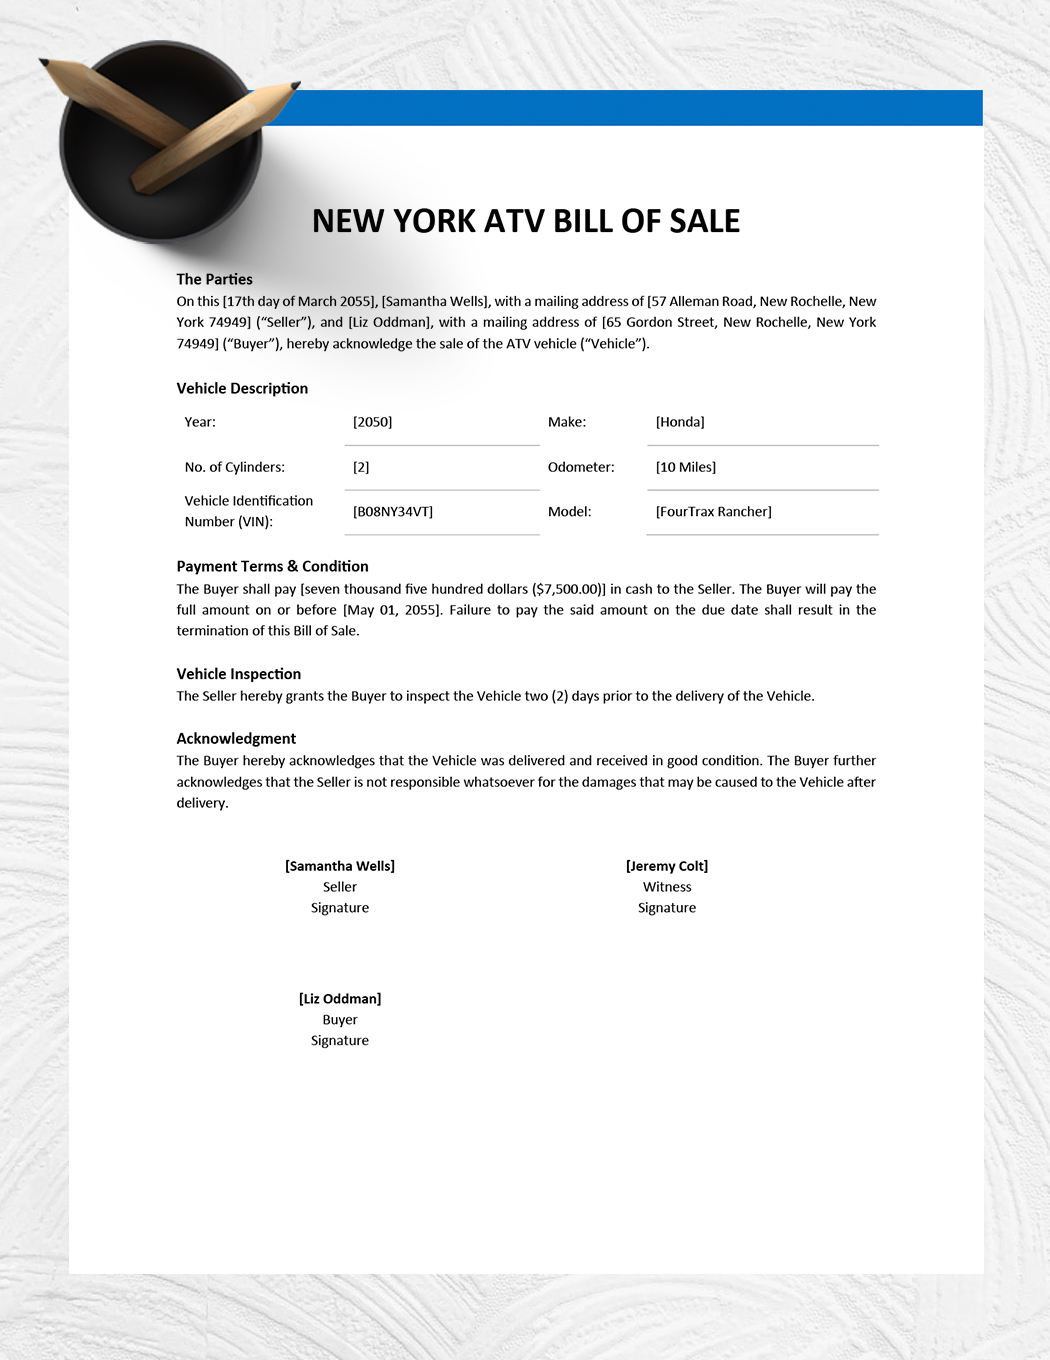 New York ATV Bill of Sale Template